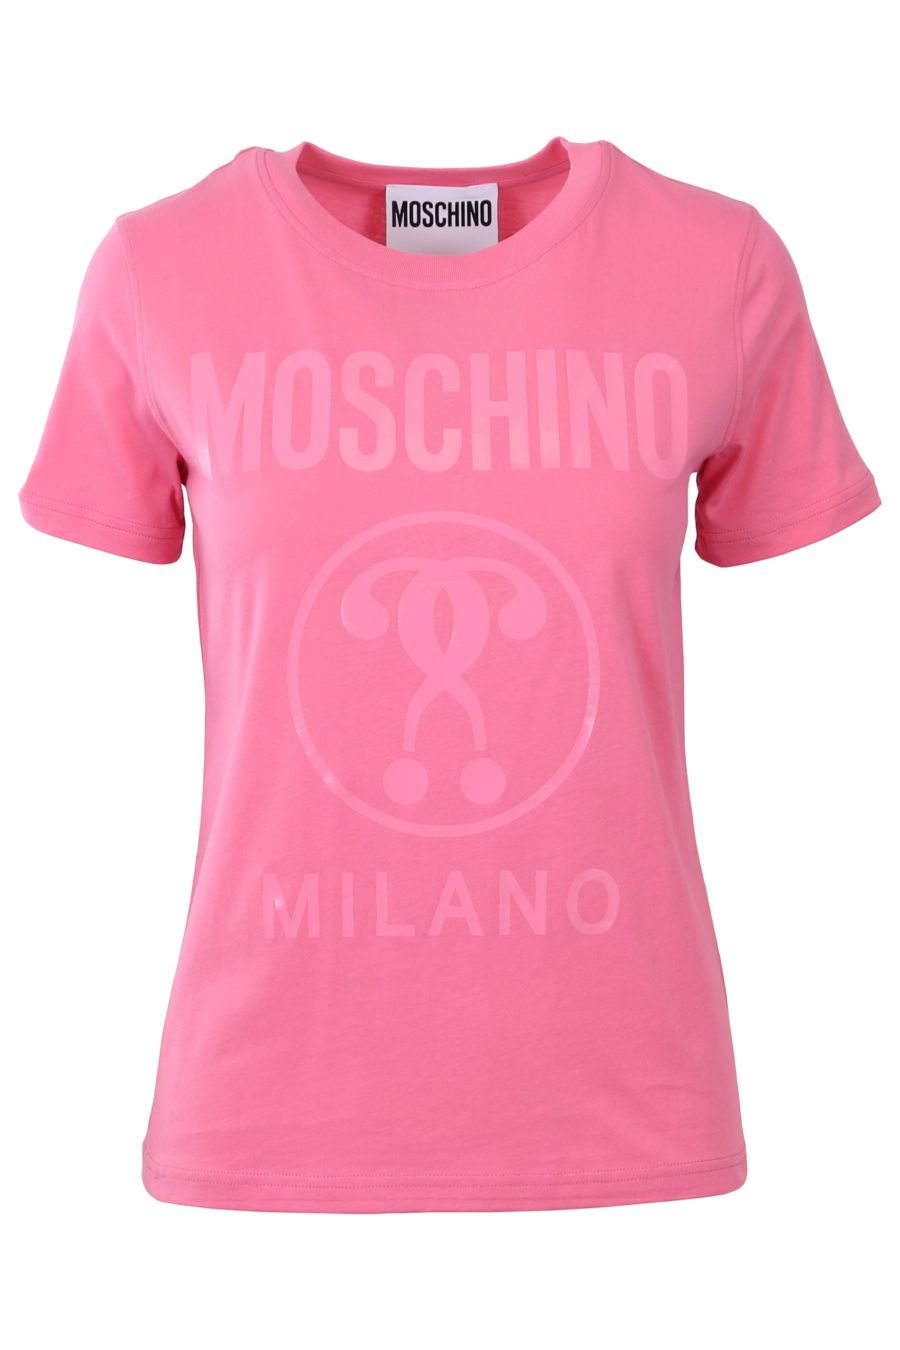 T-shirt Moschino Couture rosa mit großem Logo milano - e1f8e052928ebe84671a4da4ec100db4fba92882